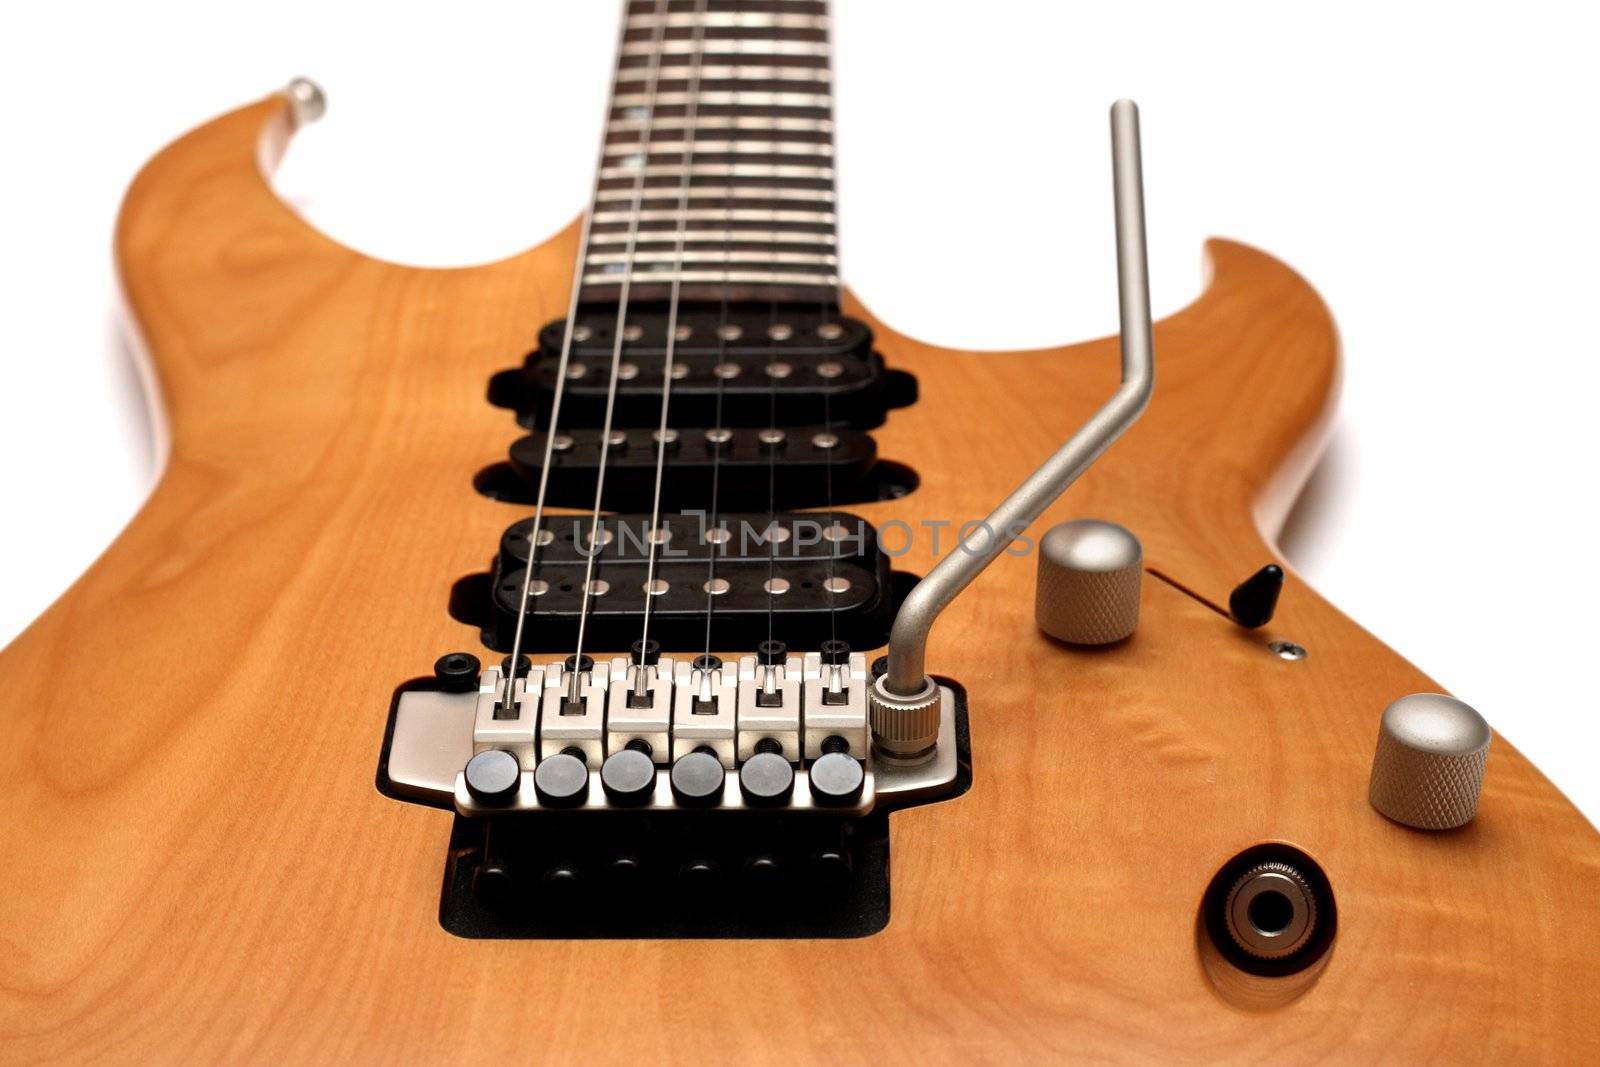 Electric guitar body closeup by Gdolgikh